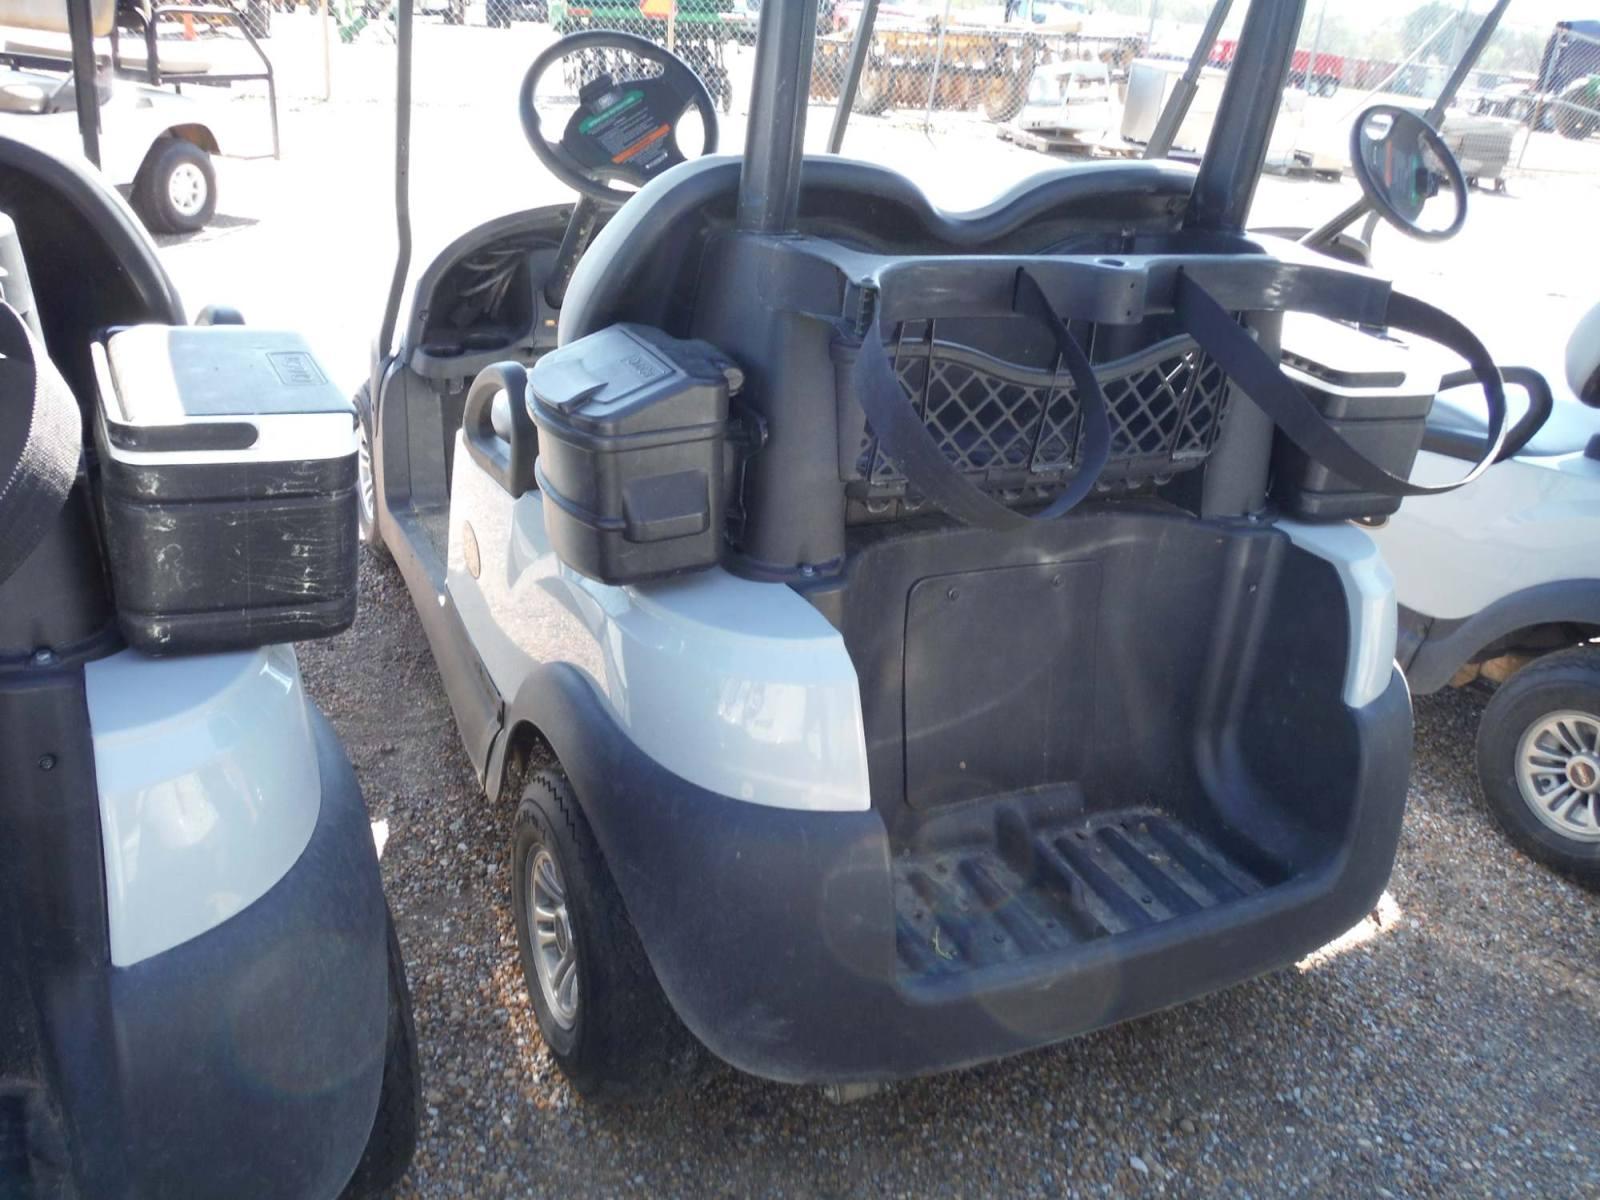 2022 Club Car Electric Golf Cart, s/n JE2220-287585 (No Title): Top, w/ Cha